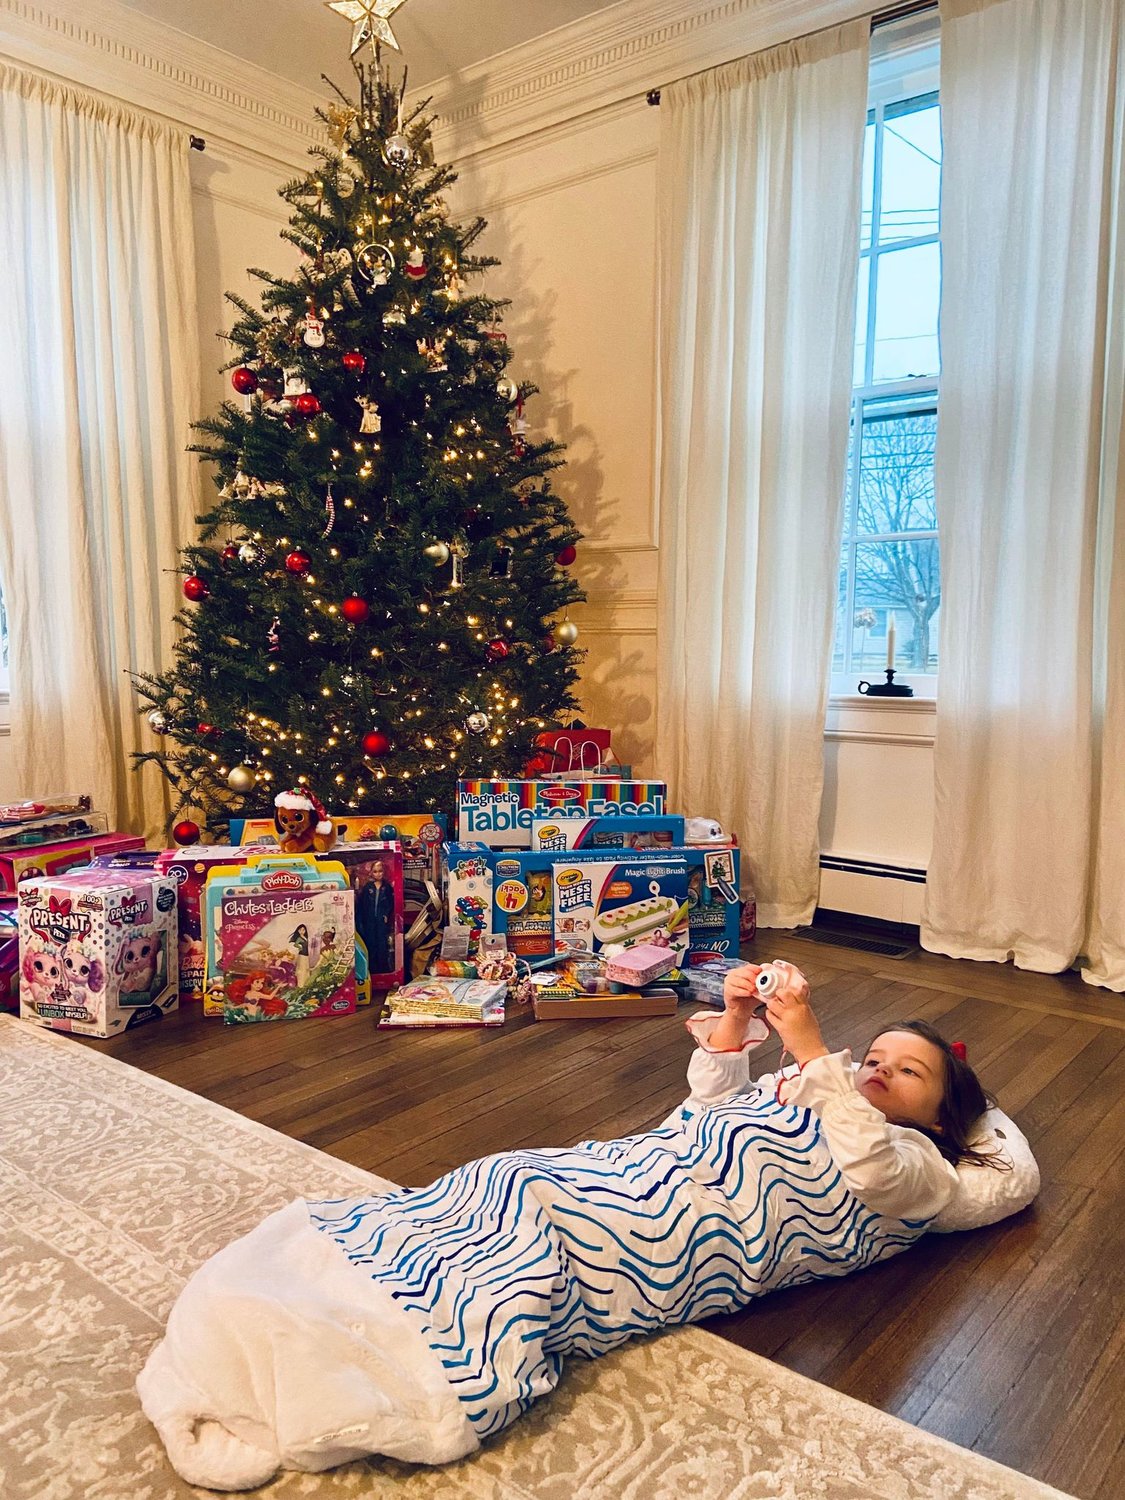 Olivia, 3, Bayport
“Her first year knowing Santa.”